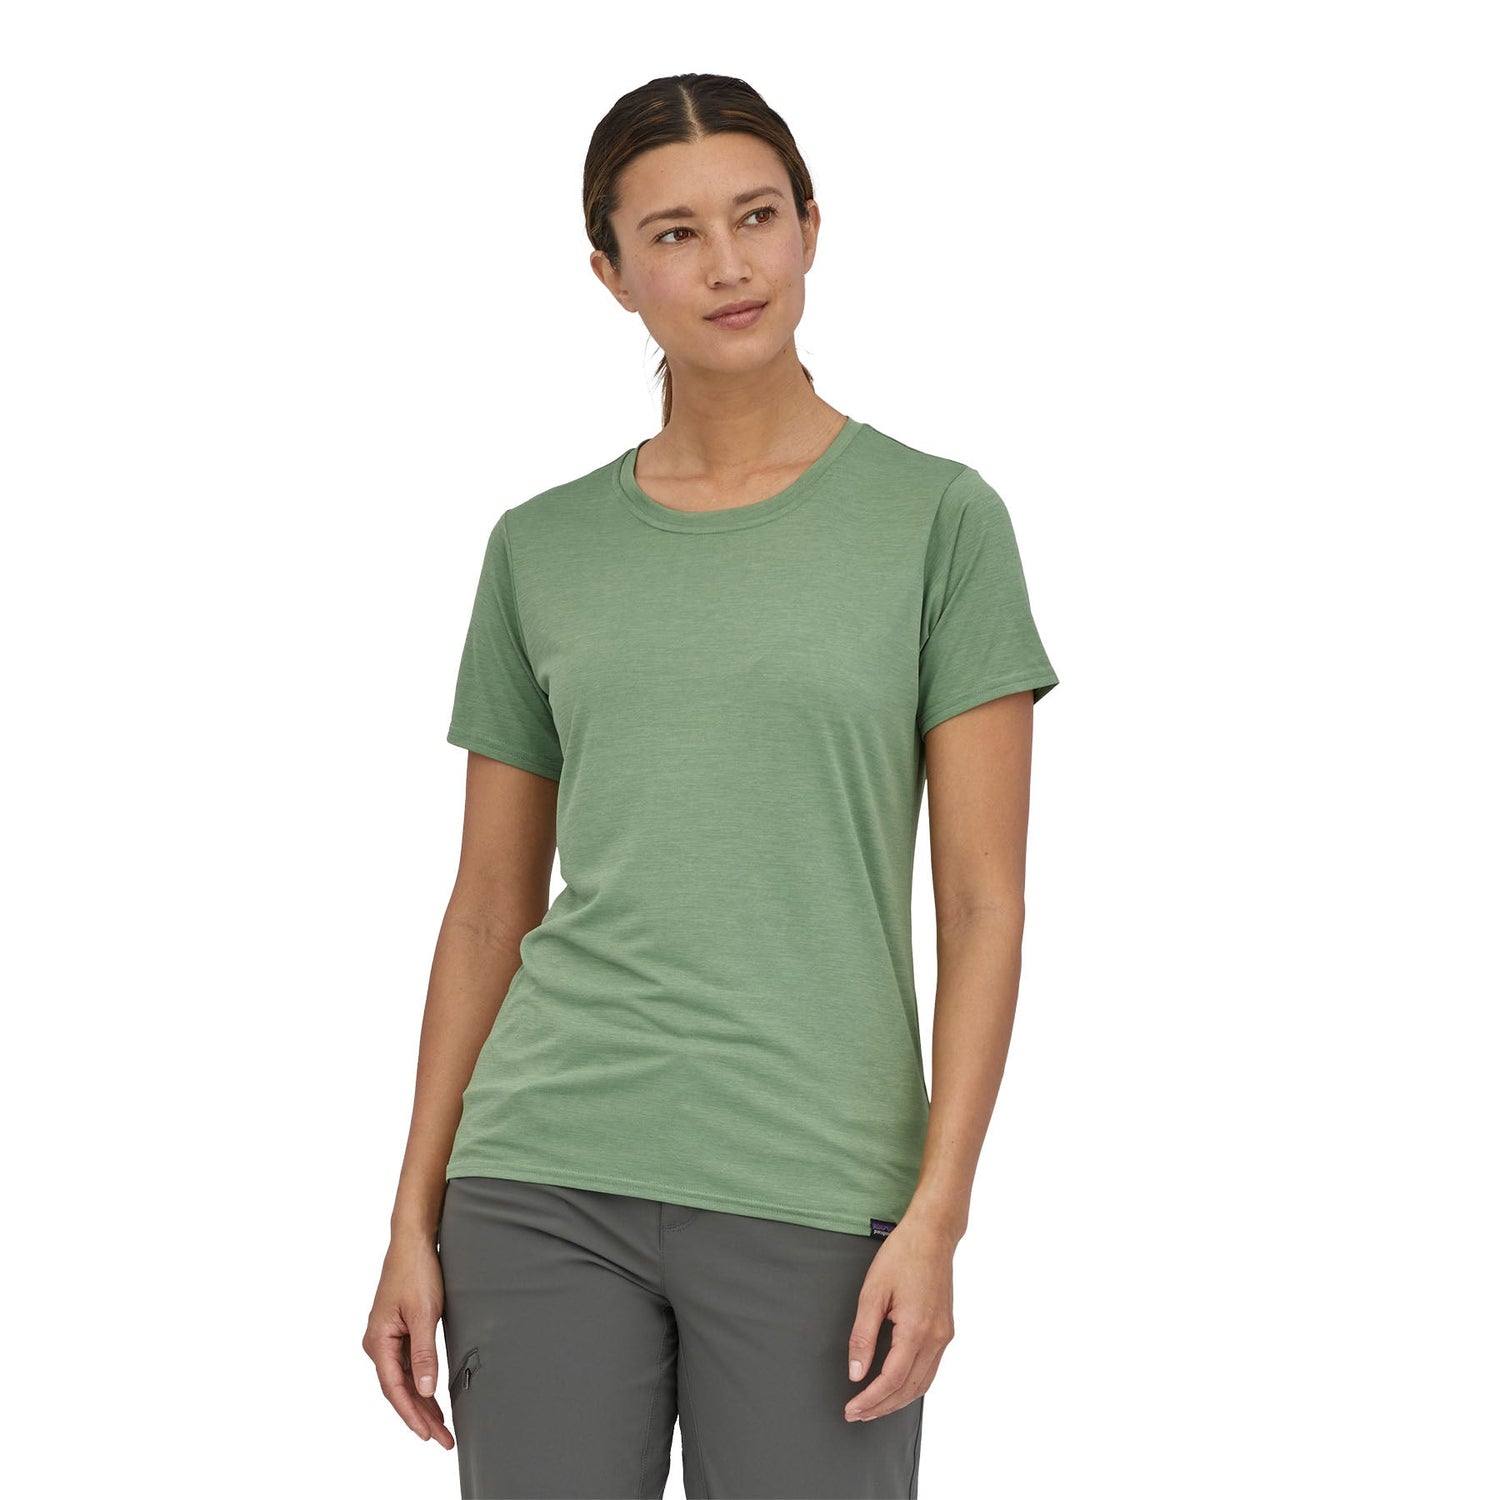 Patagonia W's Capilene Cool Daily Shirt - Recycled Polyester Sedge Green - Light Sedge Green X-Dye Shirt